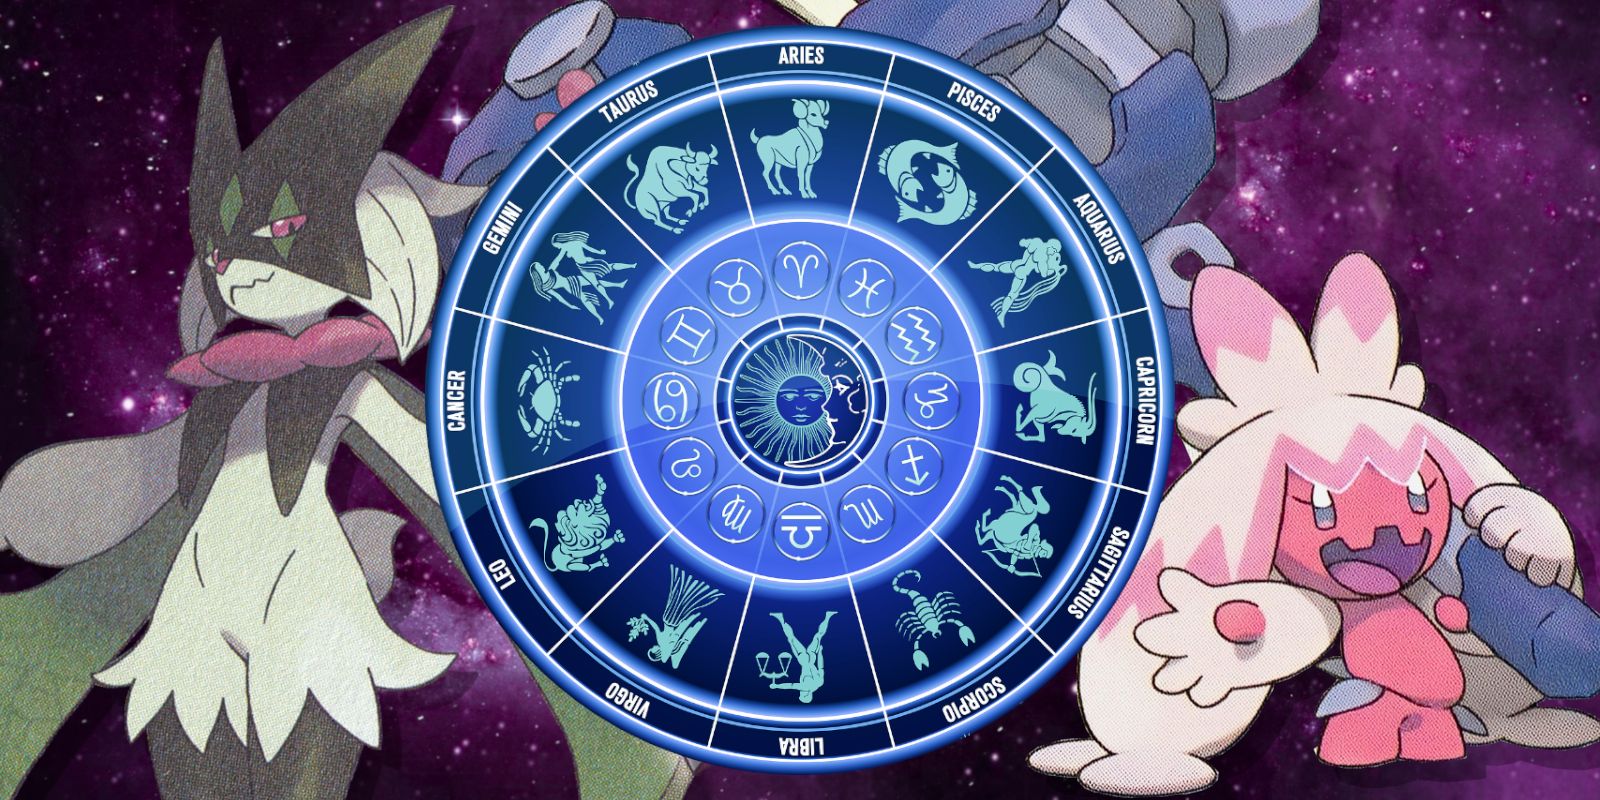 Pokémon Scarlet And Violet: Which Generation IX Pokémon Are You, Based On Your Zodiac Sign?